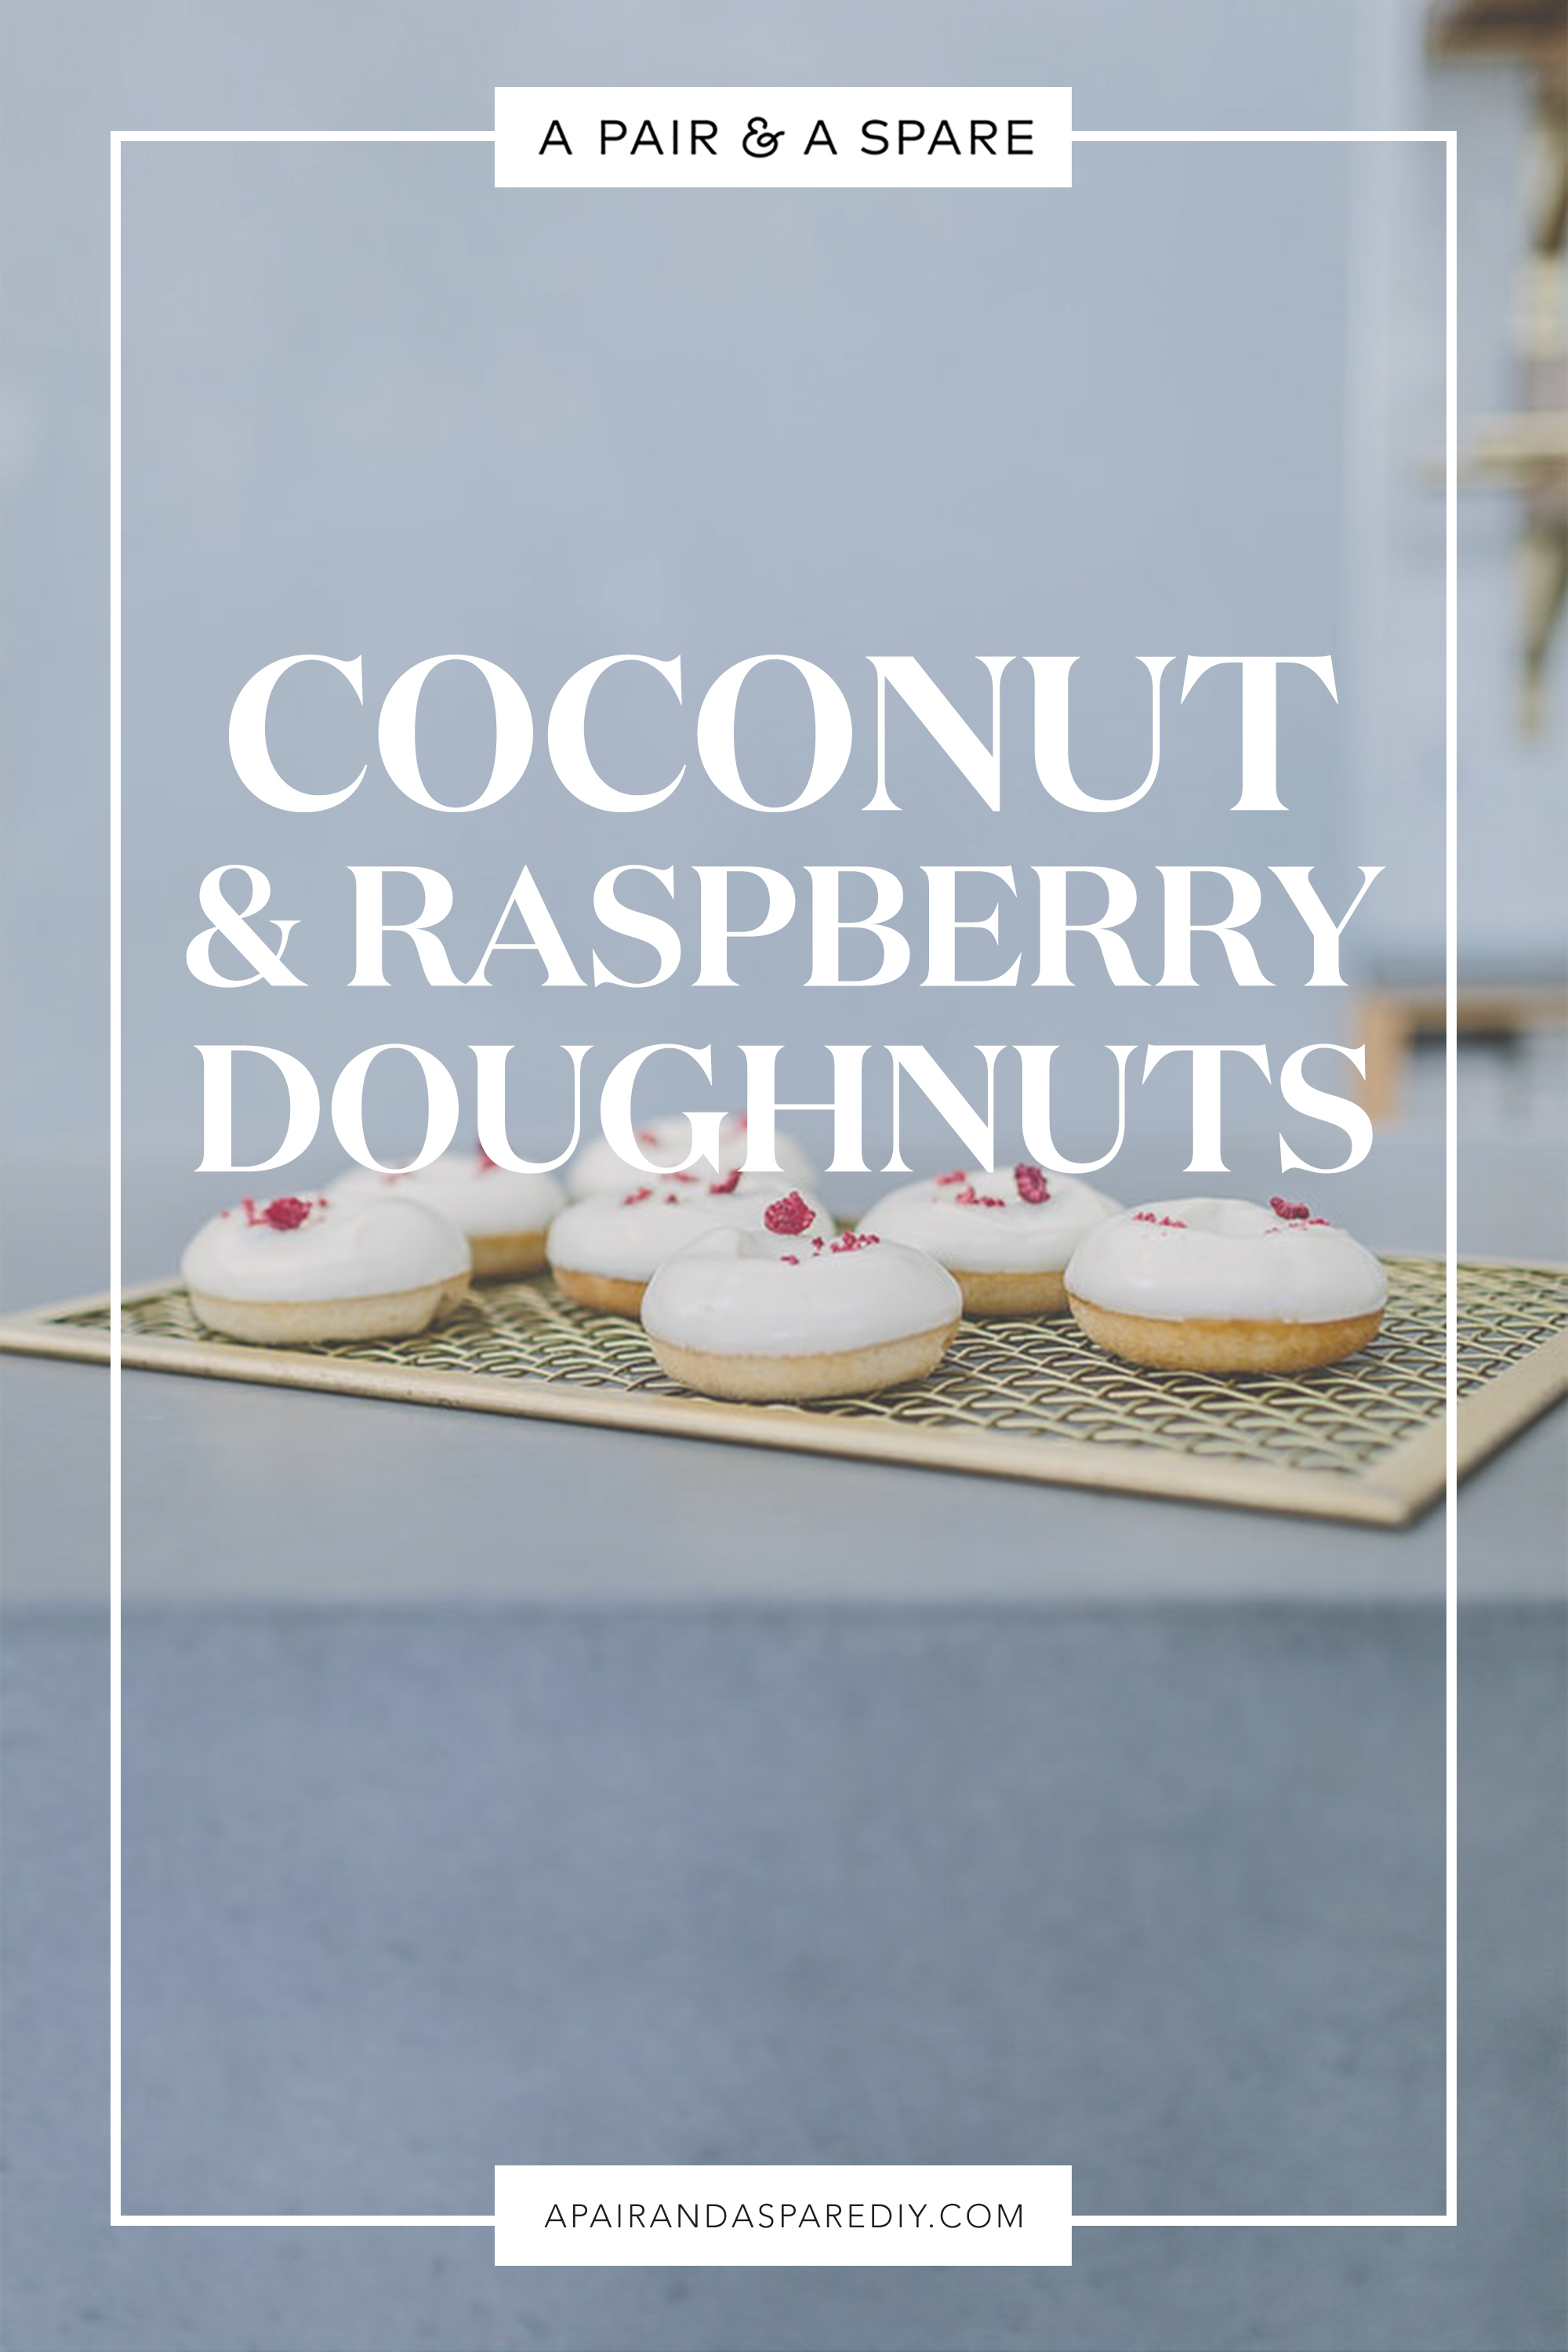 Coconut & Raspberry Baked Doughnuts